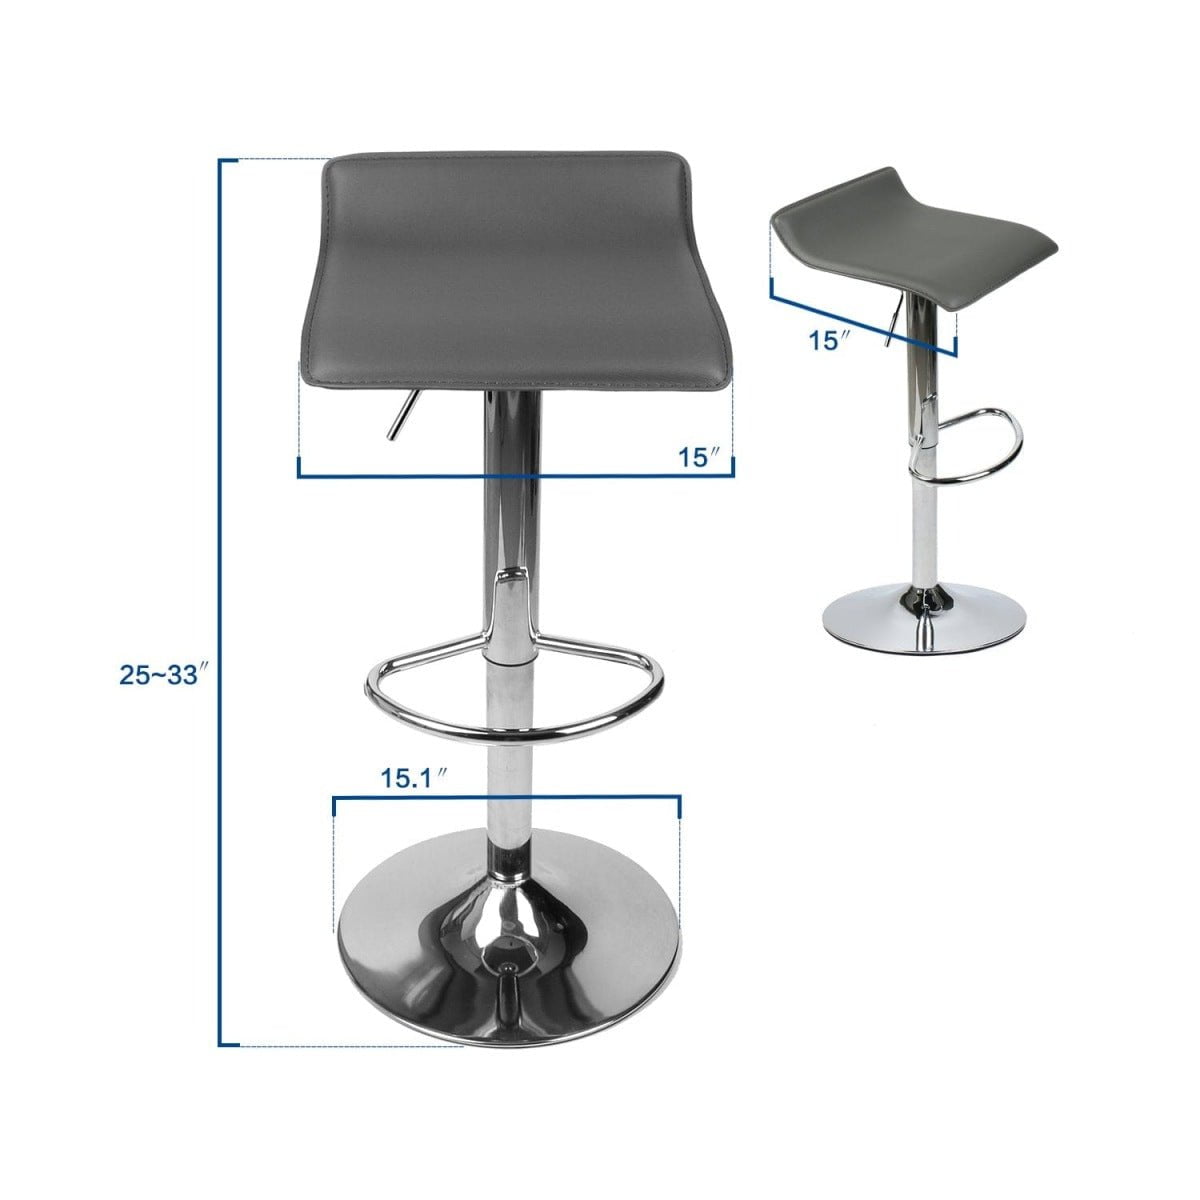 Elecwish grey bar stool OW002 size